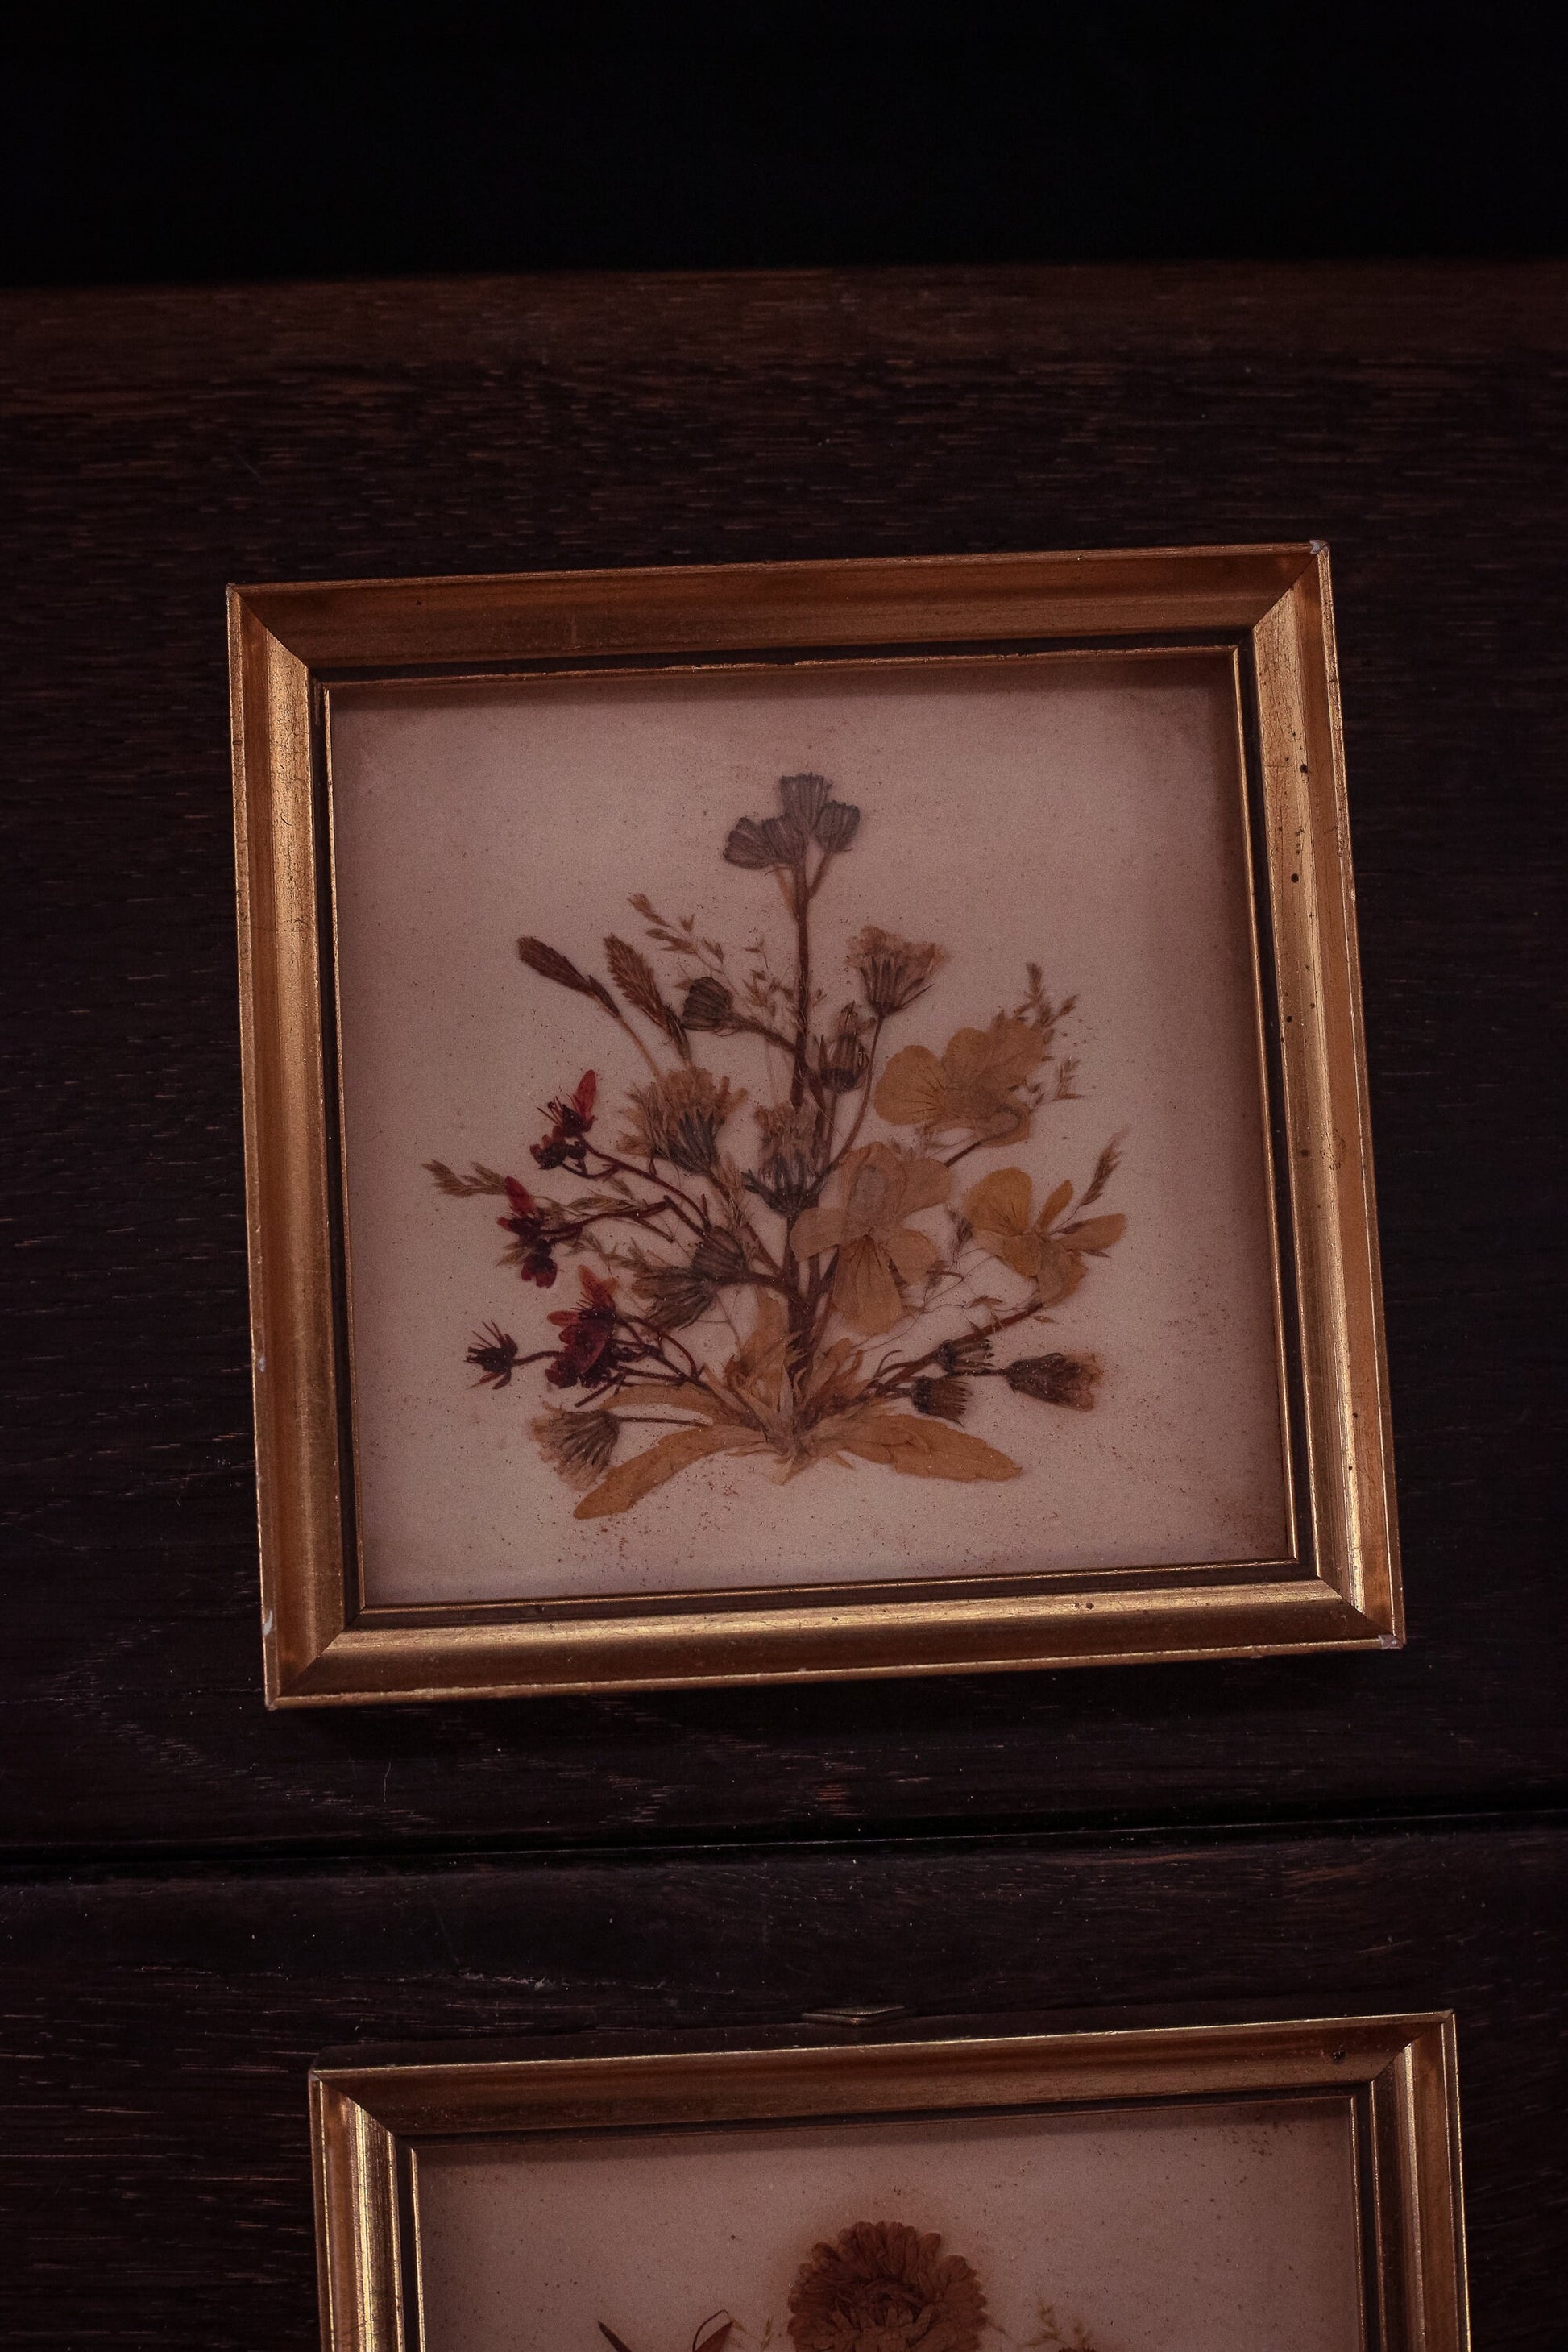 Set of 3 Pressed Flowers in Frames - Vintage